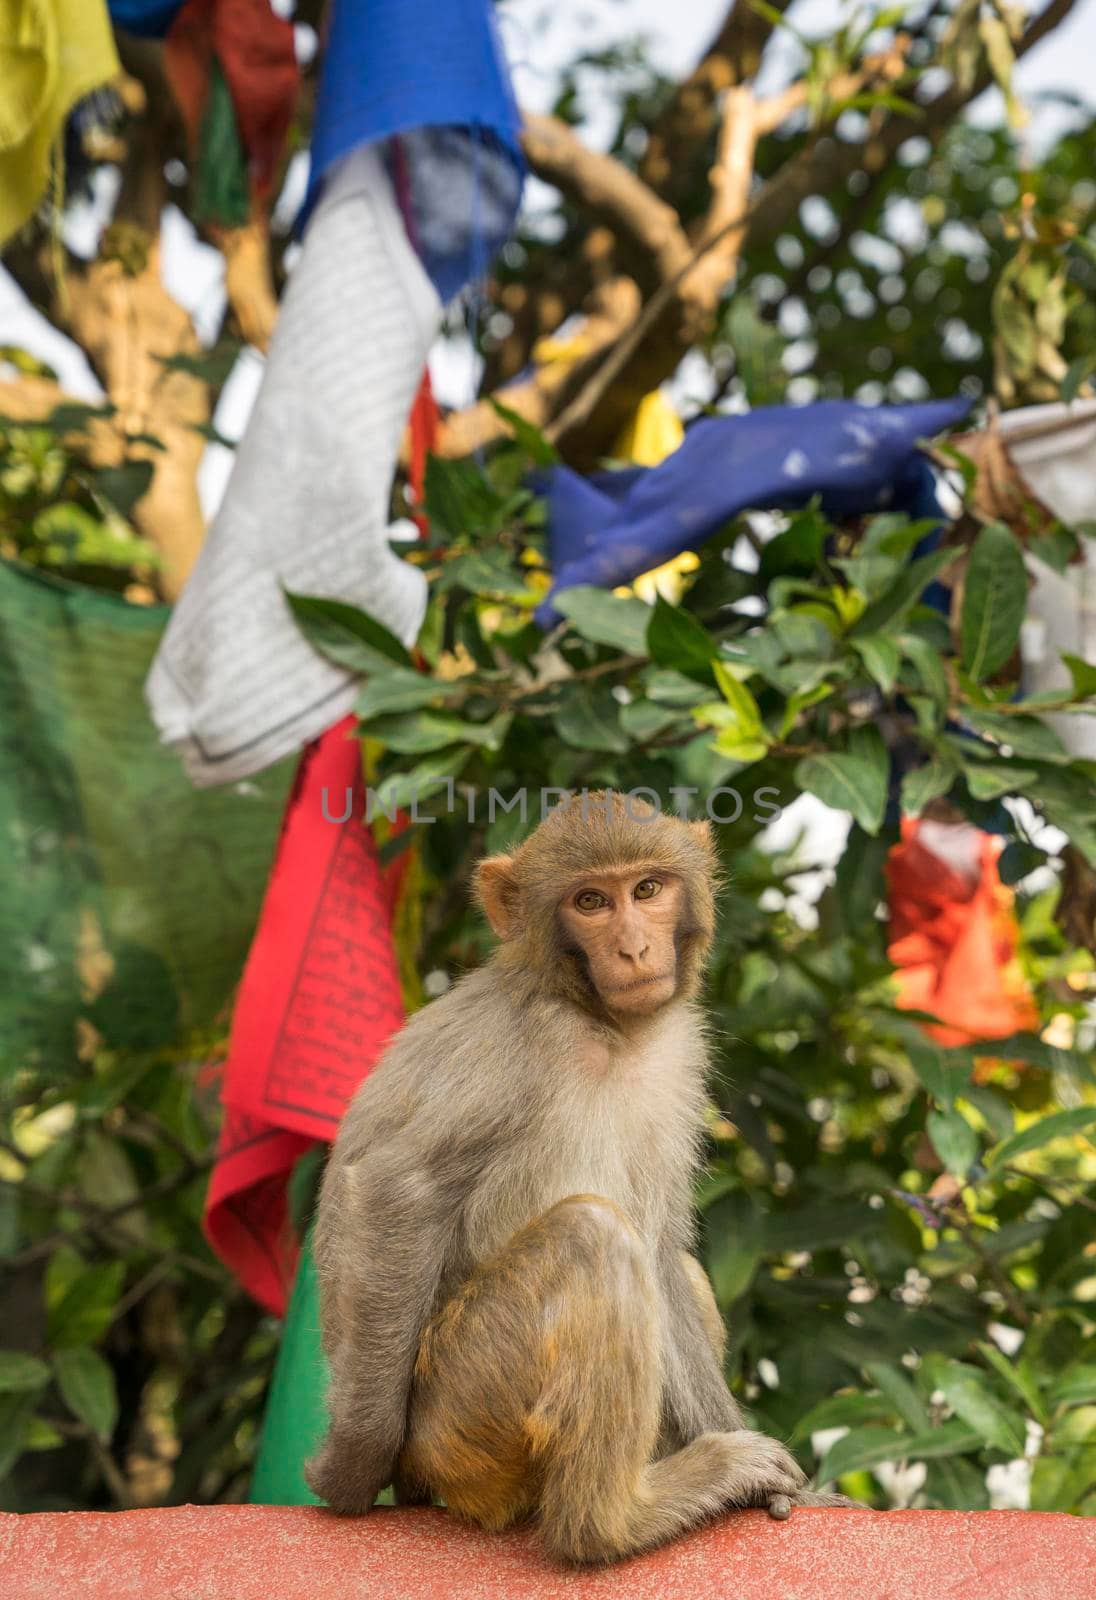 Monkey and prayer flags from Swayambunath temple in Kathmandu by Arsgera